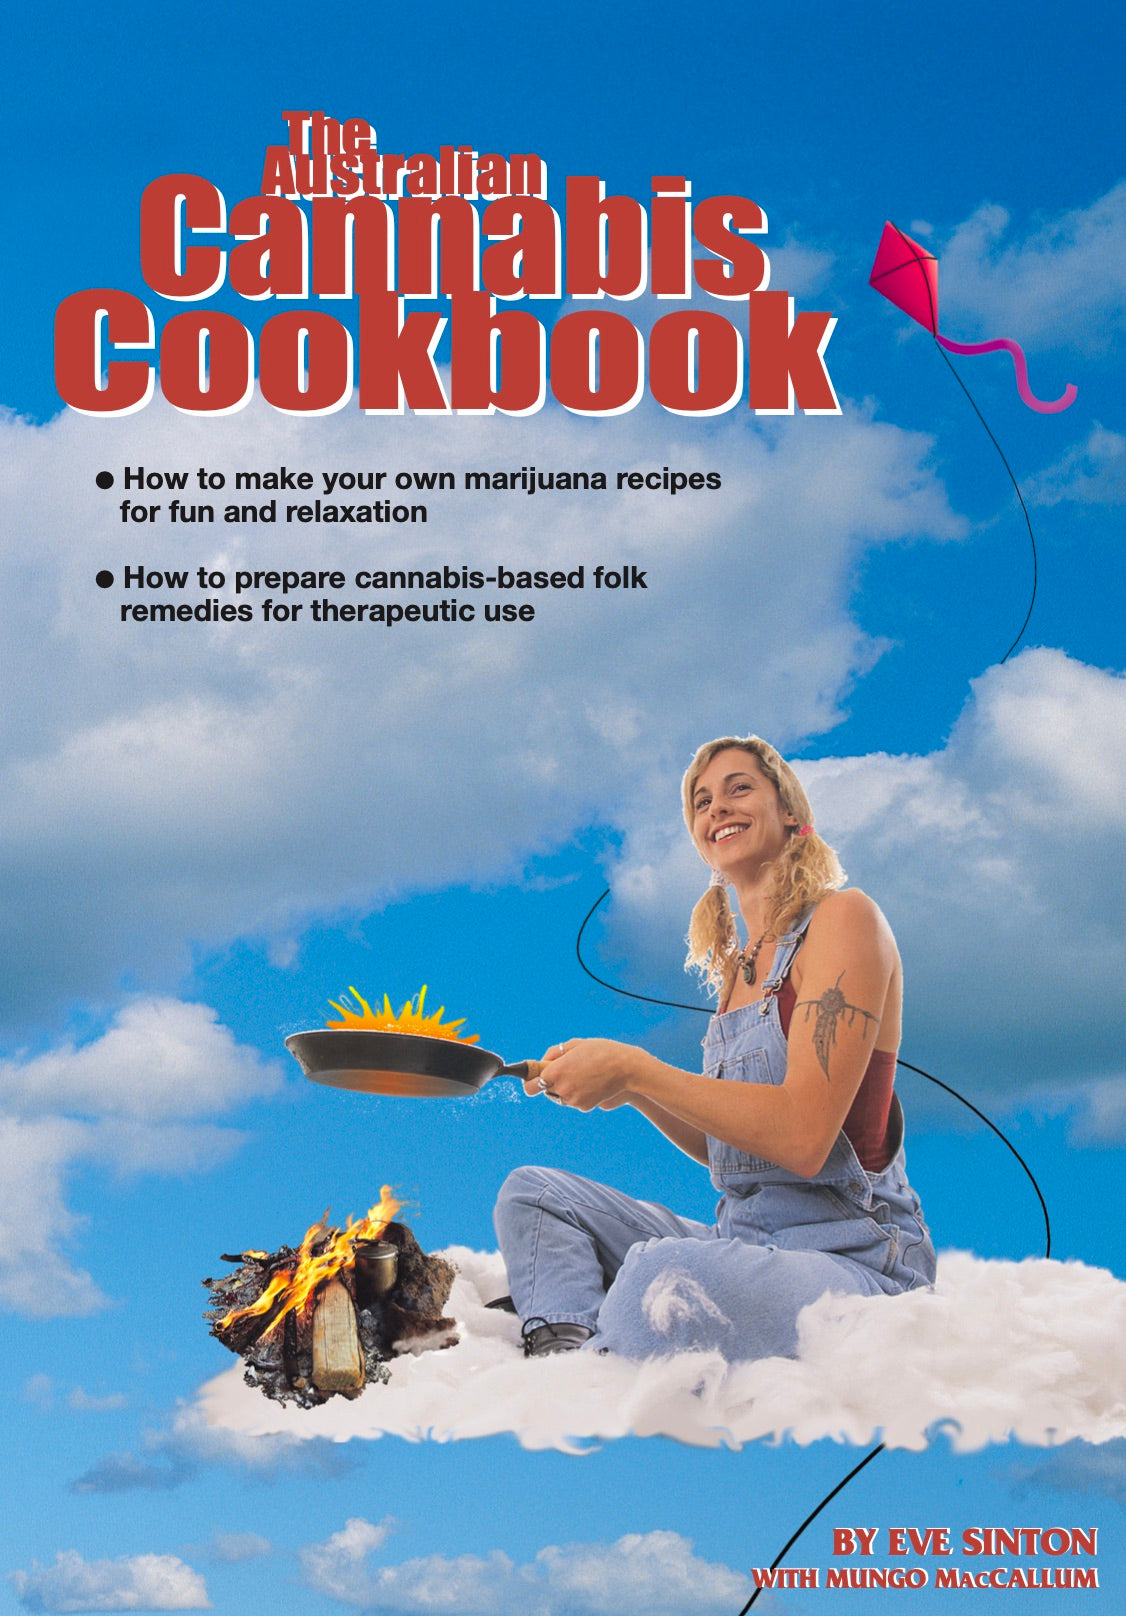 Funny Cookbooks -  Australia